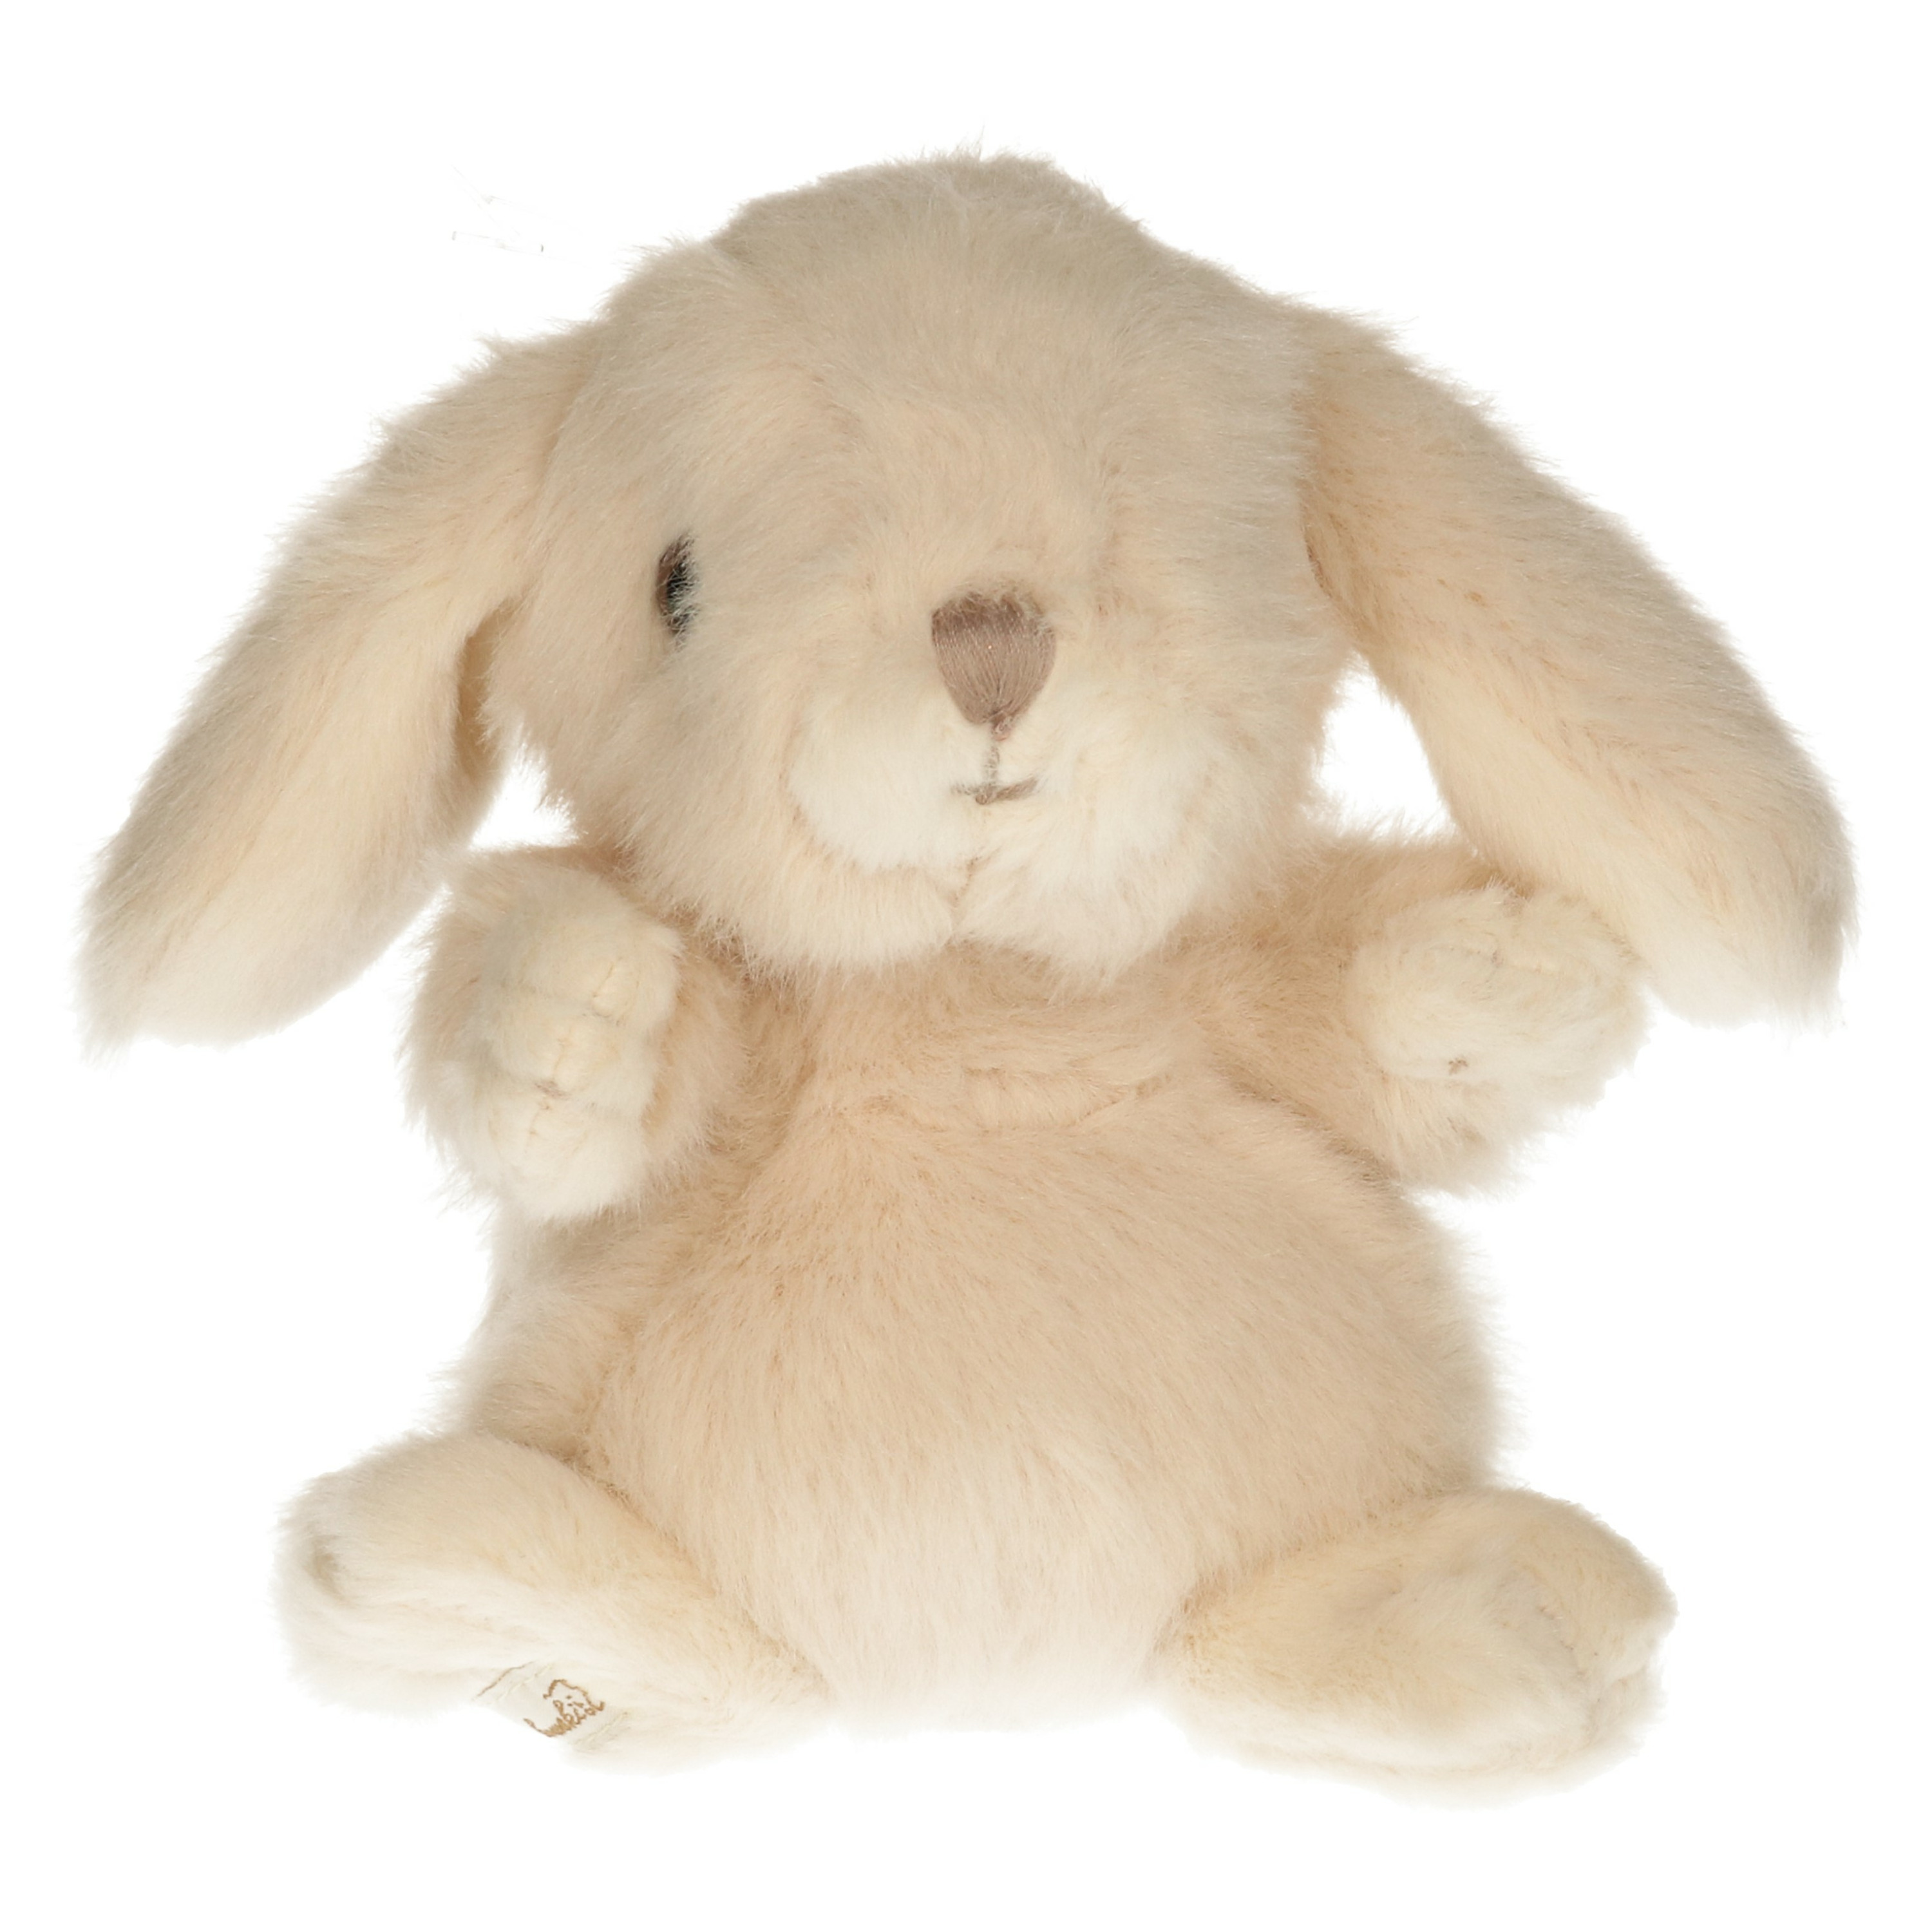 Bukowski pluche konijn knuffeldier creme wit zittend 15 cm luxe knuffels